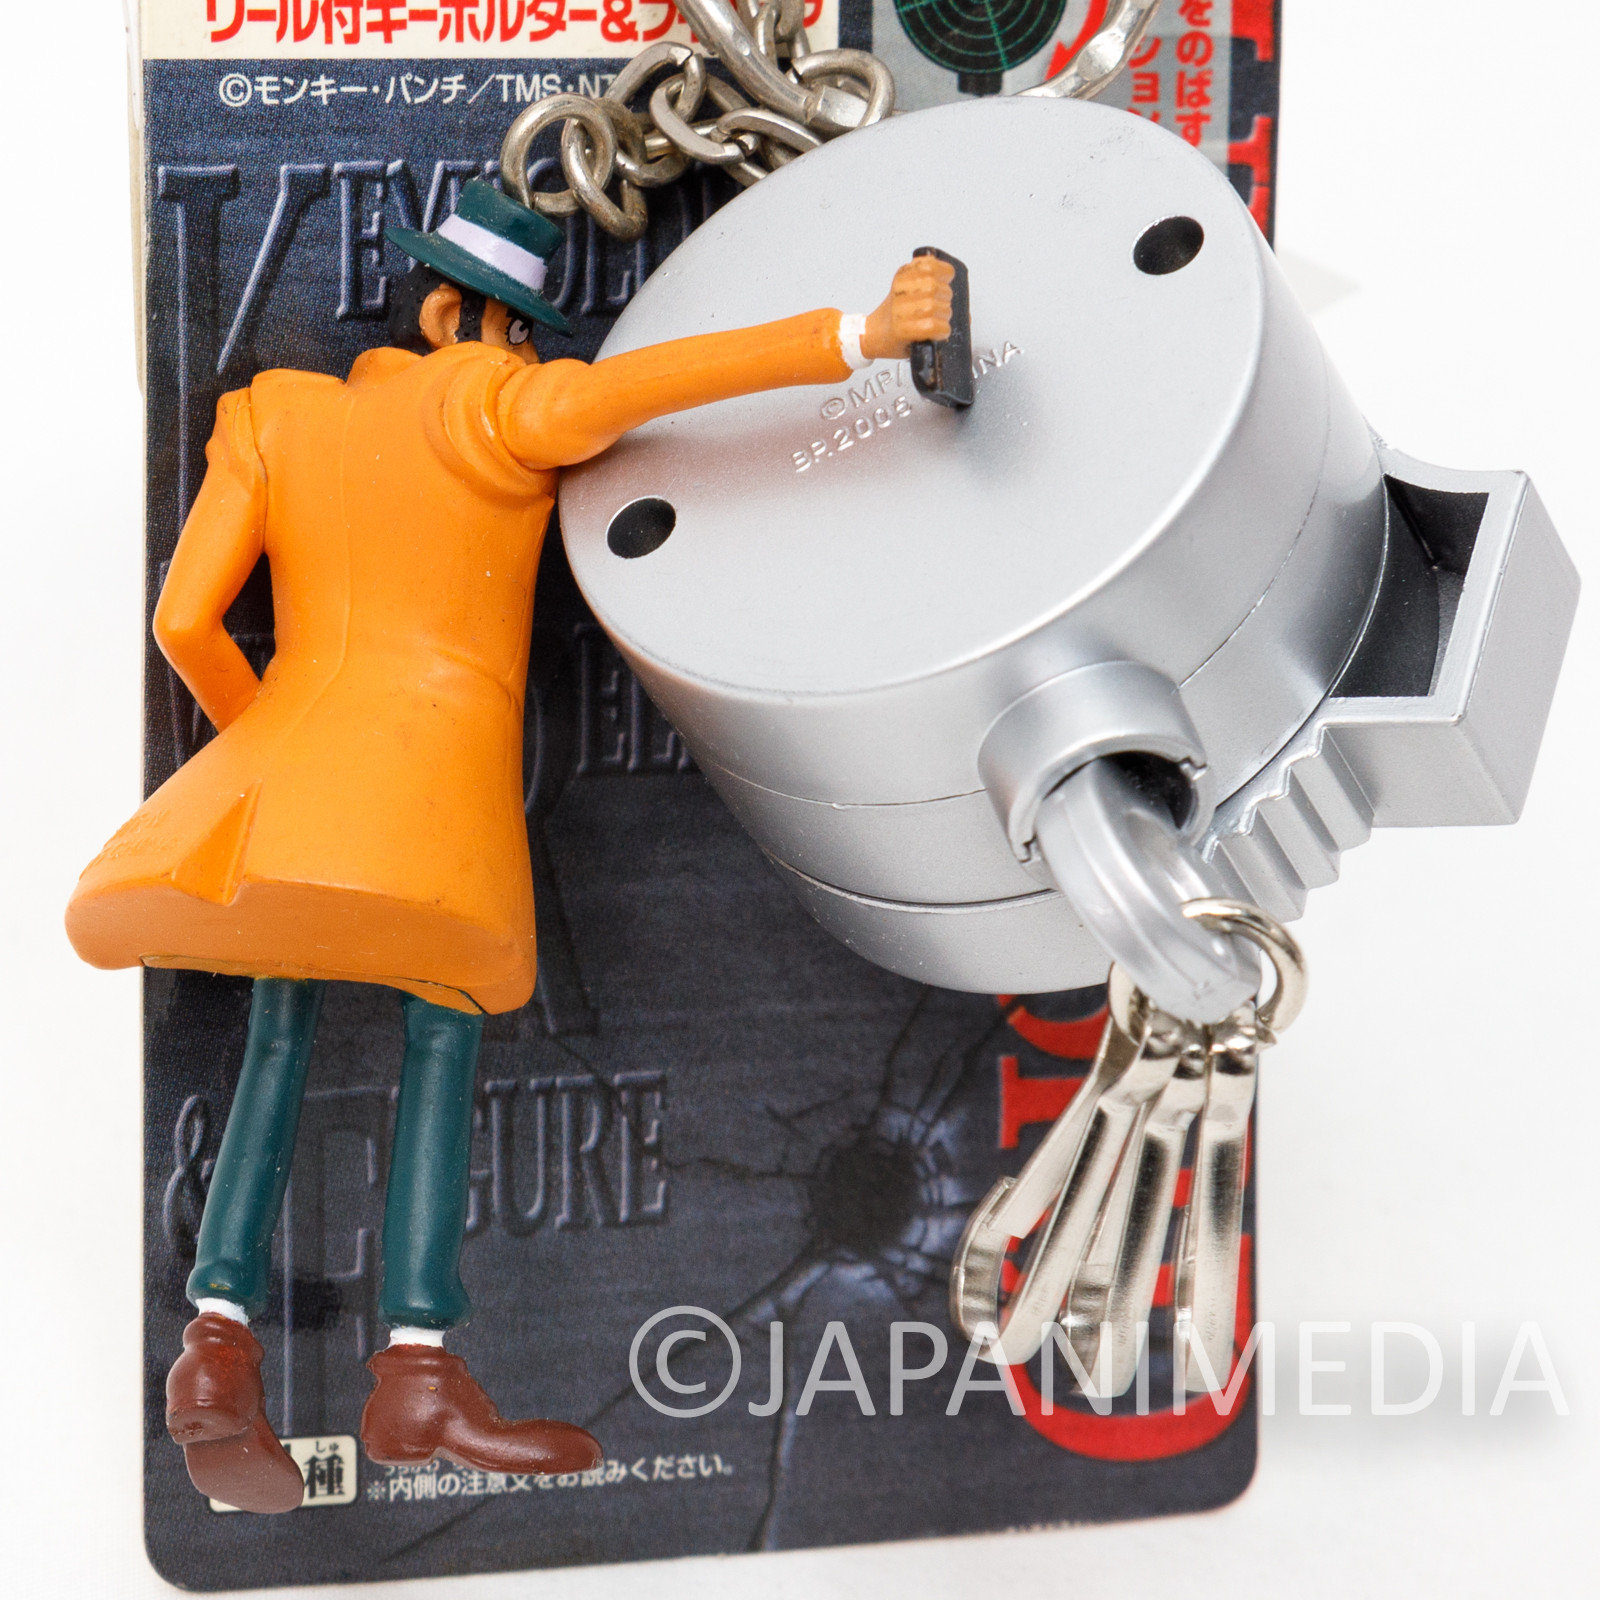 Lupin the Third (3rd) Zenigata Figure Keychain wit Reel JAPAN ANIME